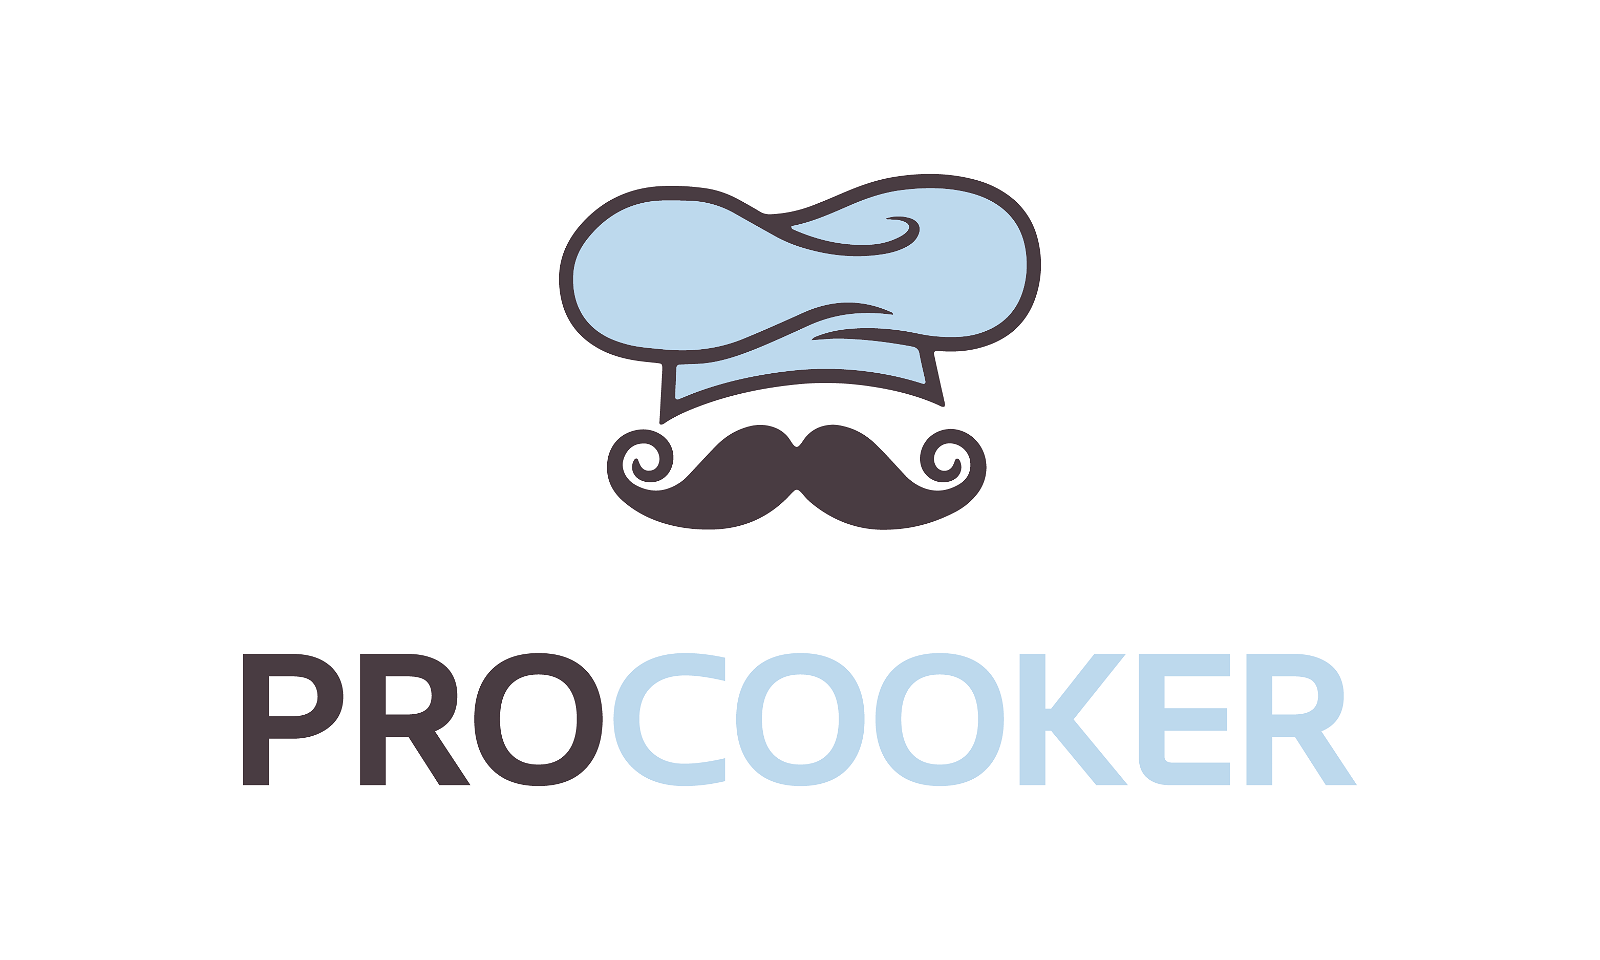 ProCooker.com - Creative brandable domain for sale